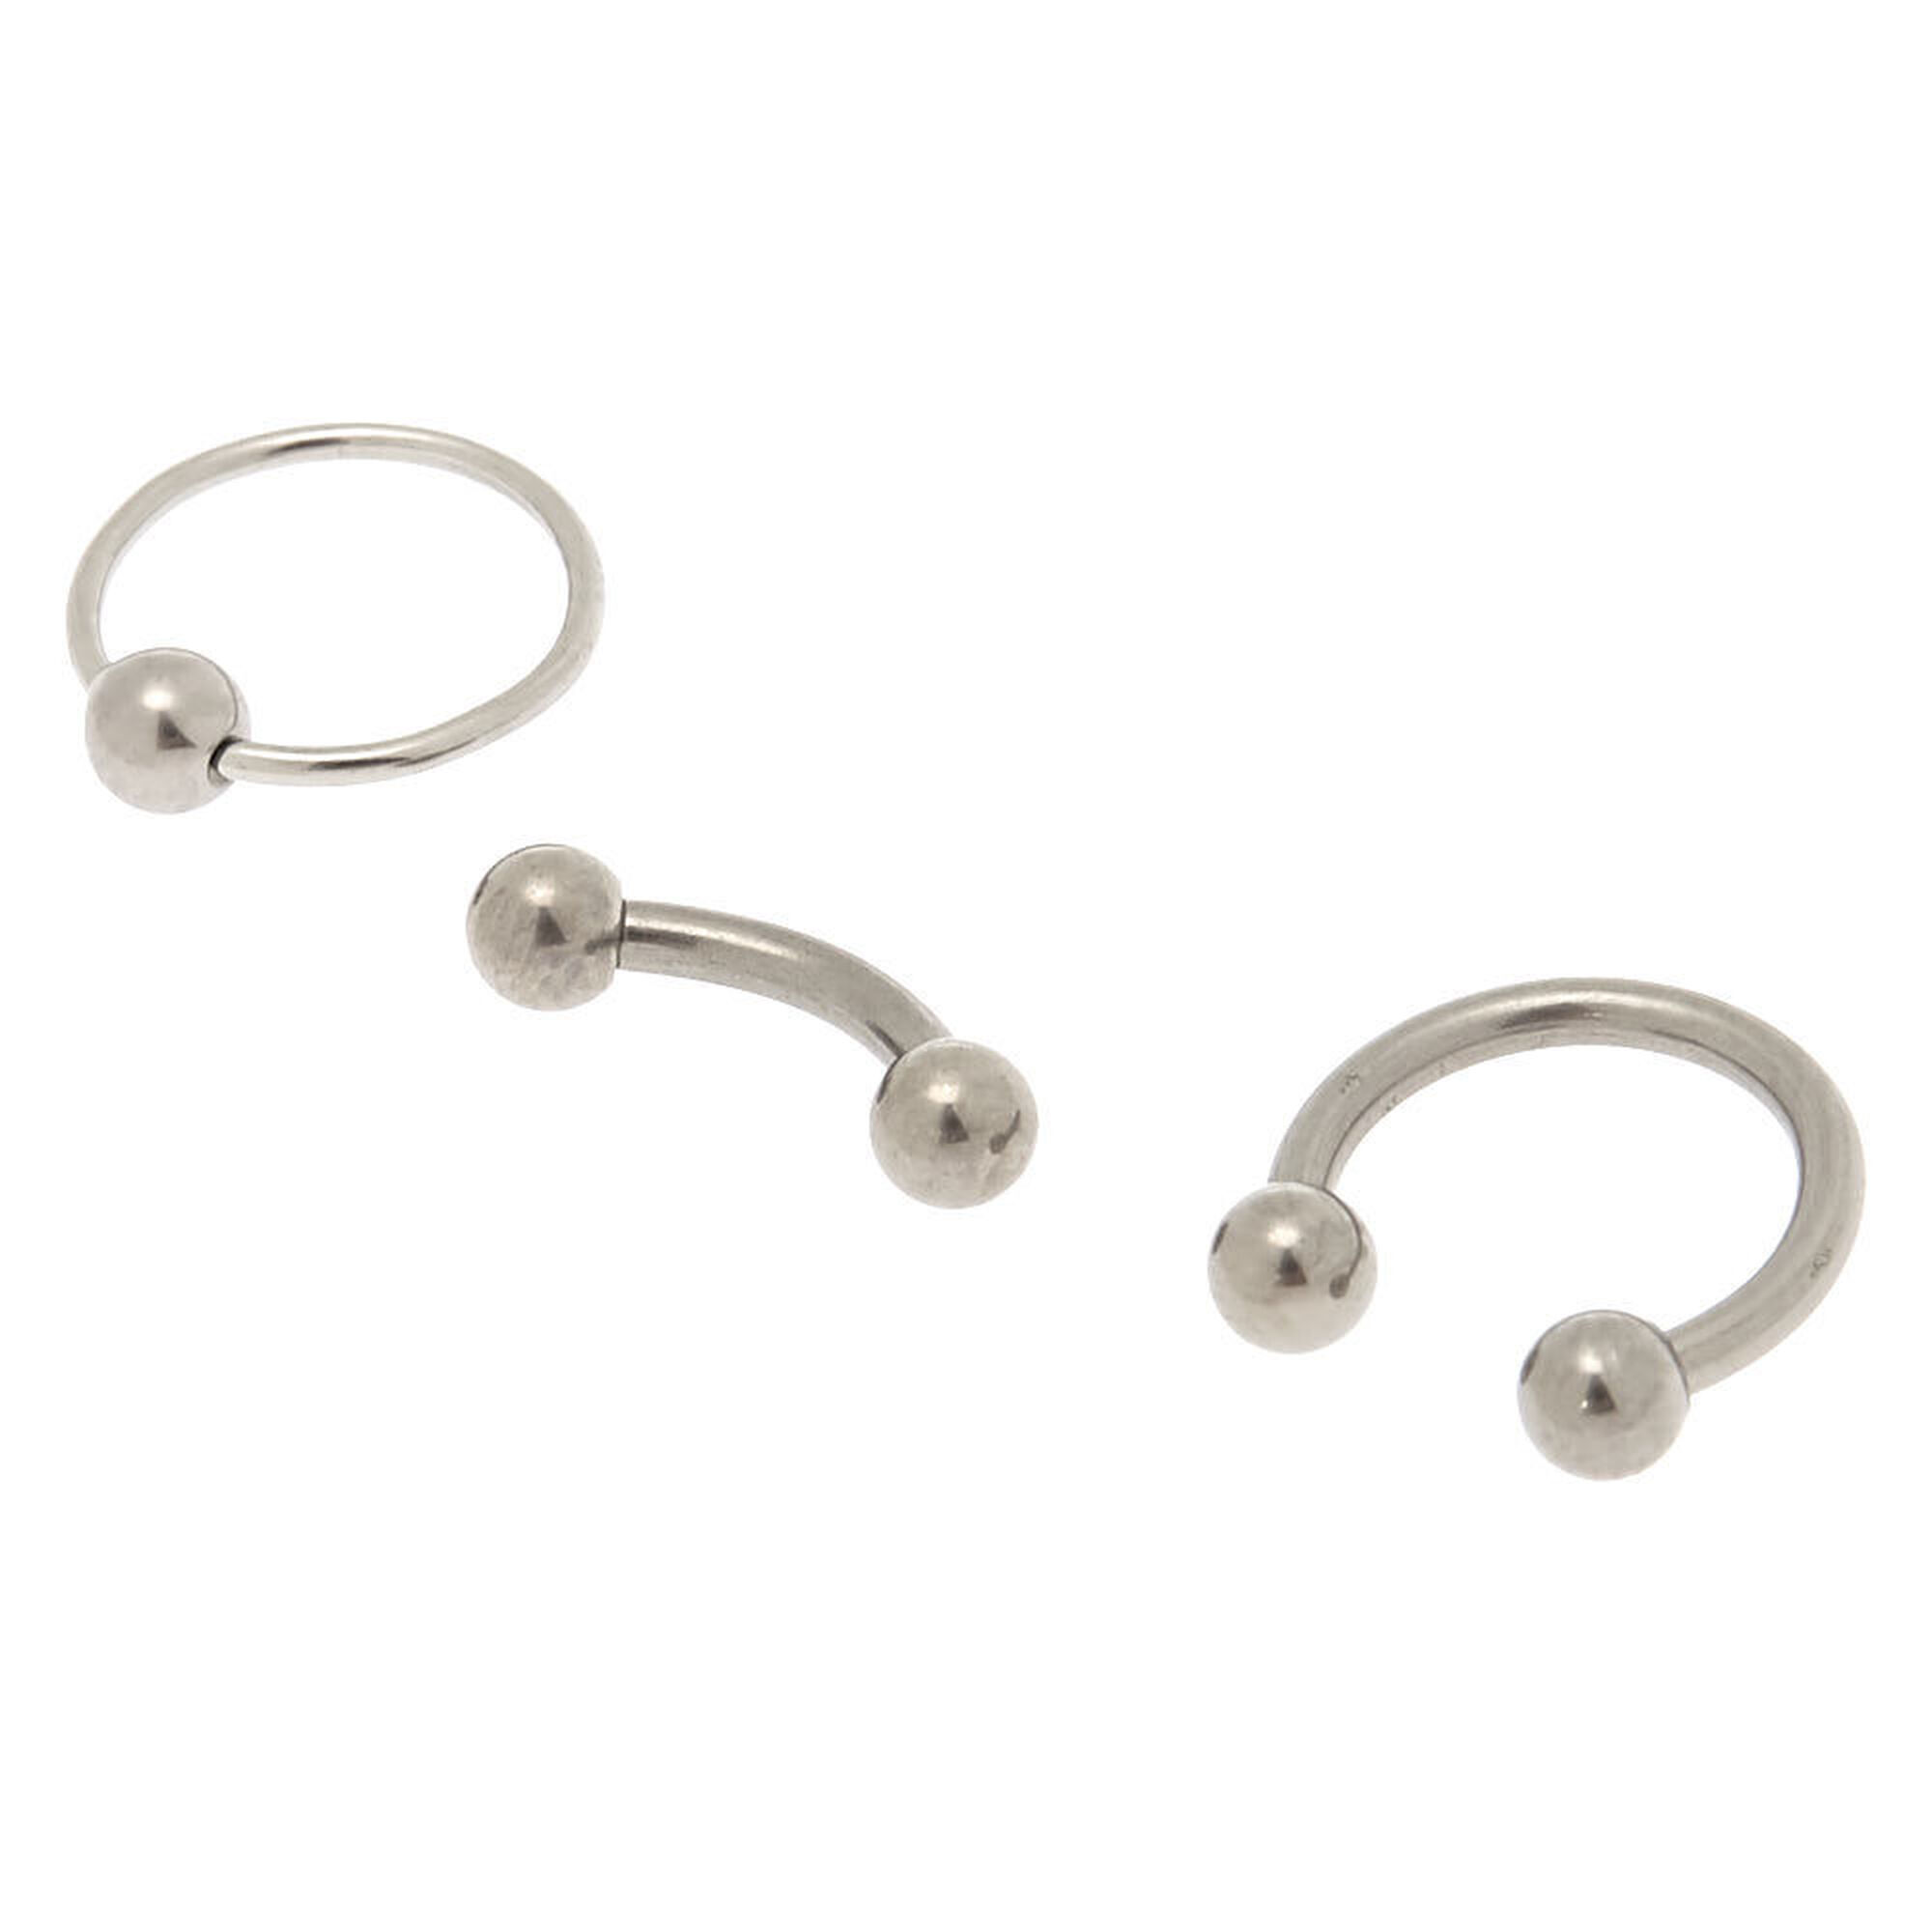 2 Cartilage Earrings Clear Crystal Cluster Gem Balls Studs Posts 14 ga – I  Love My Piercings!